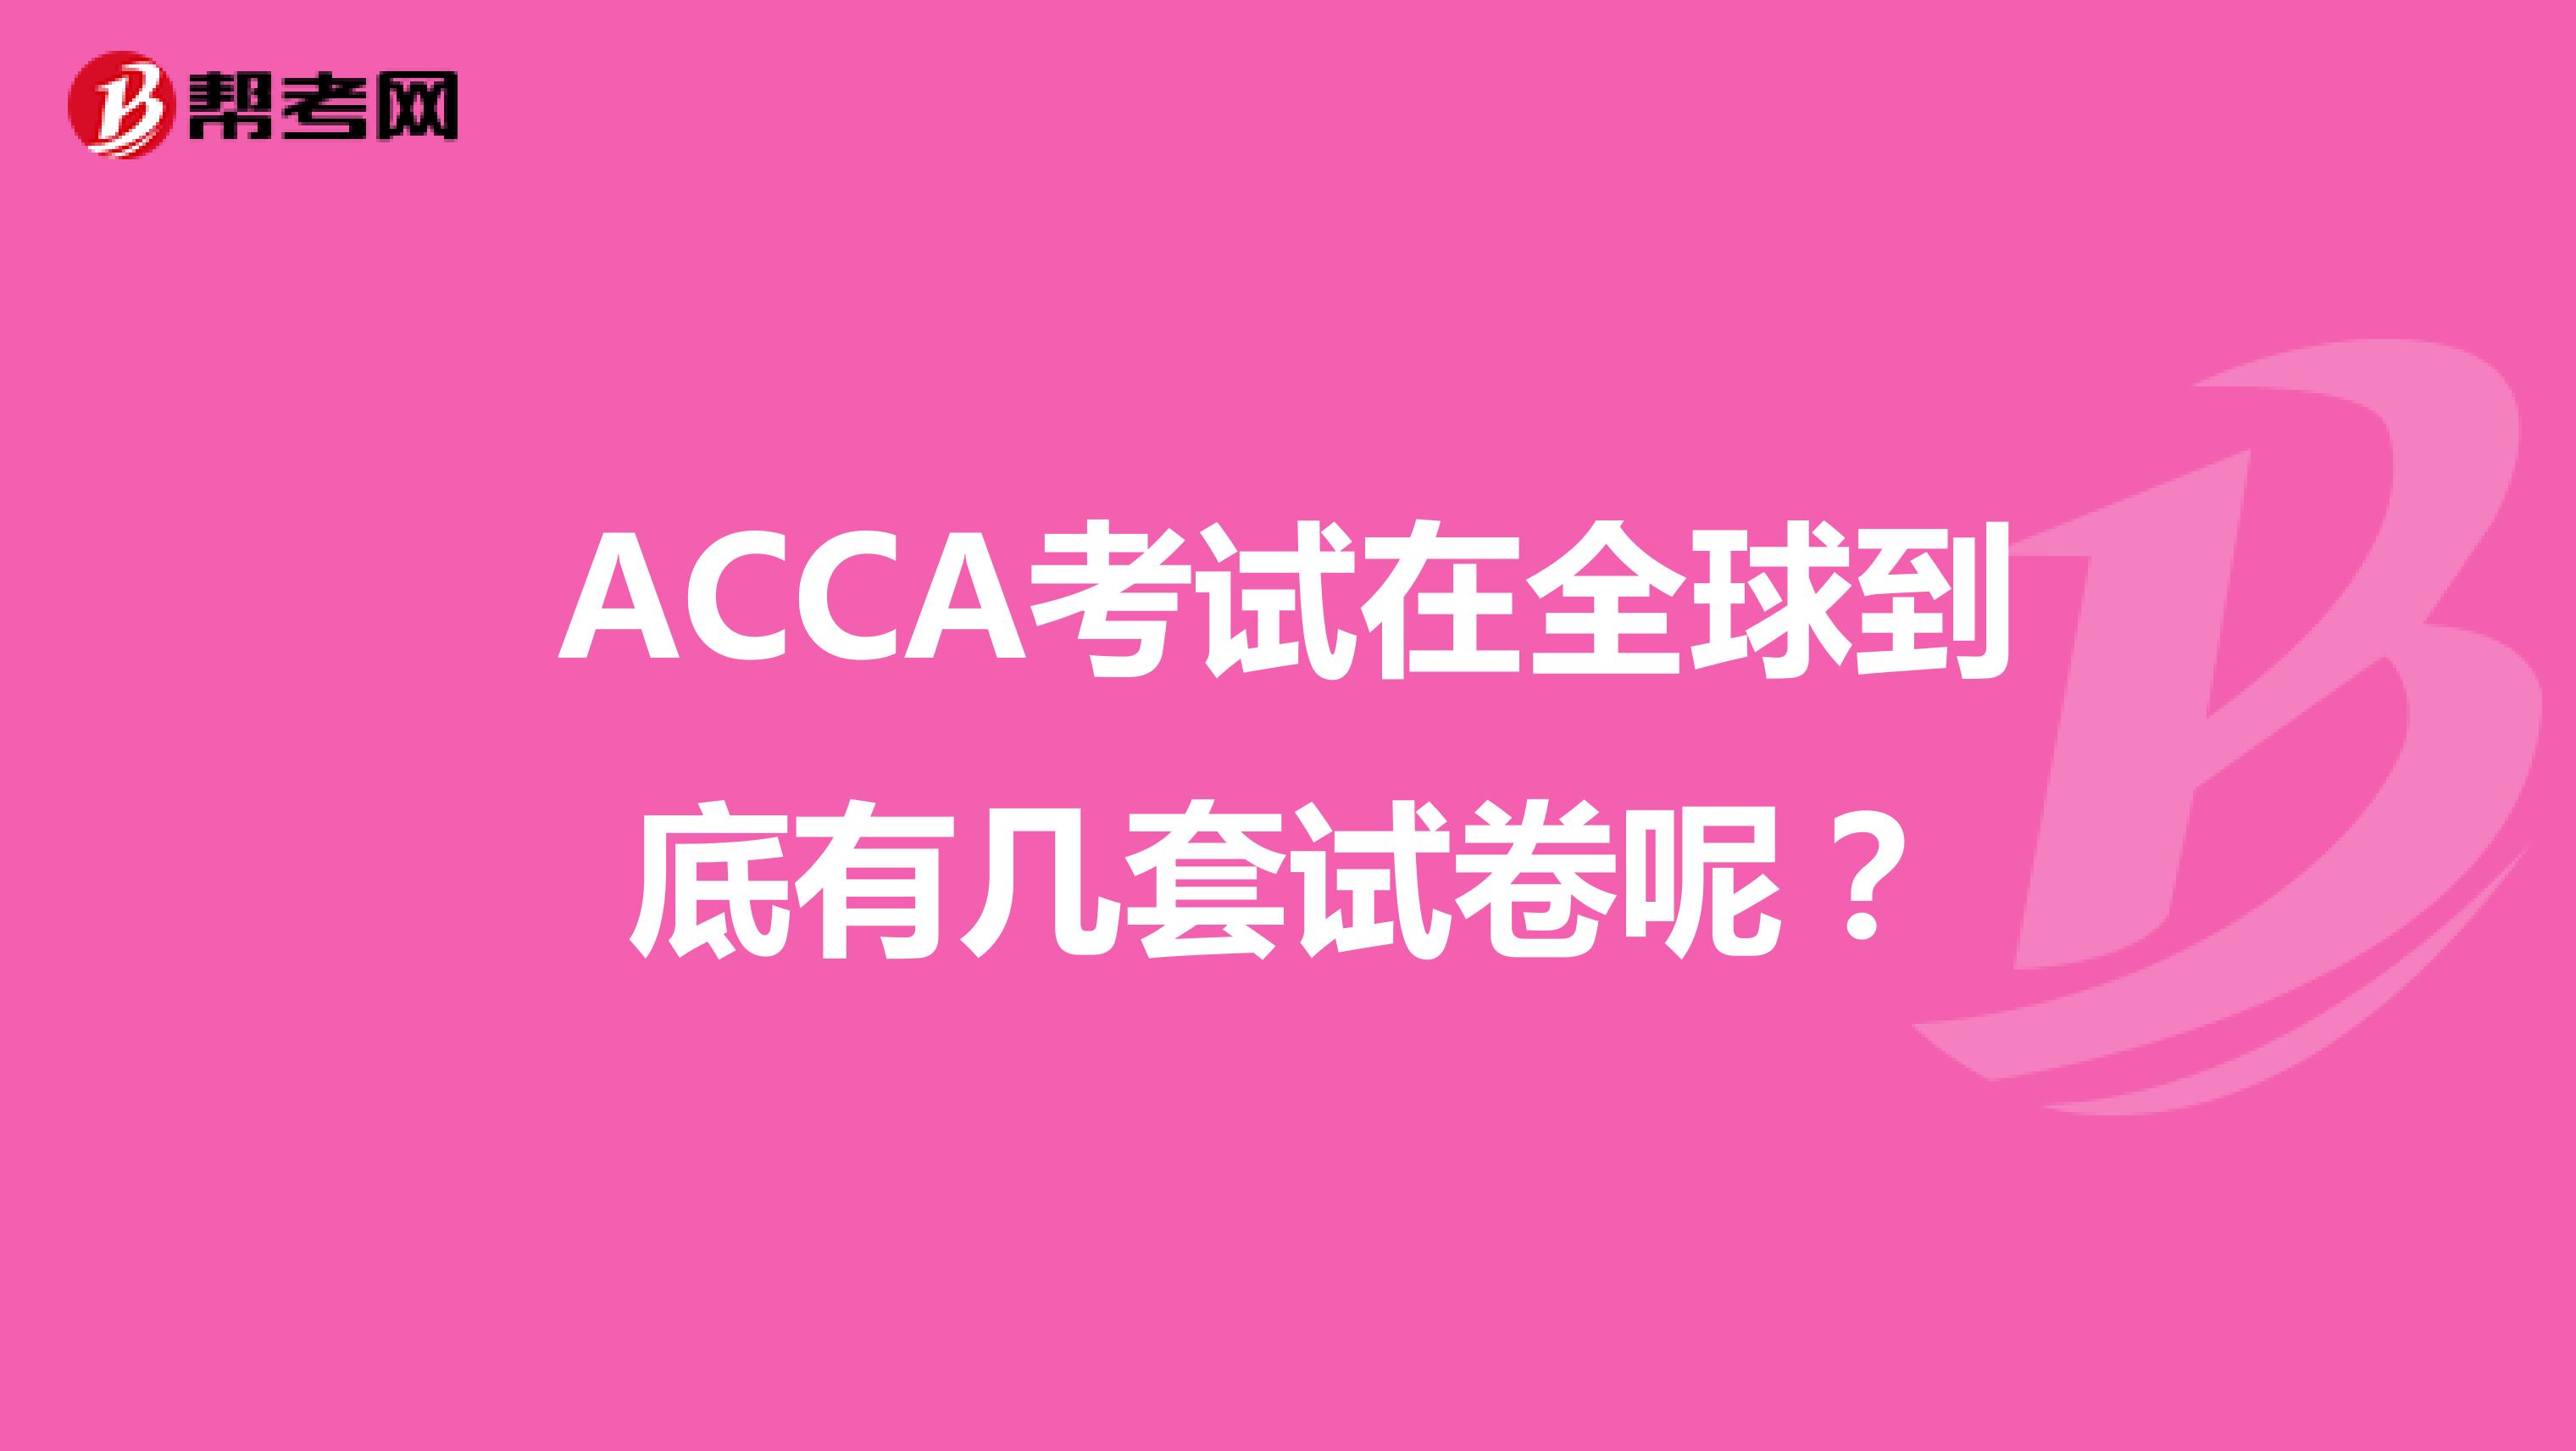 ACCA考试在全球到底有几套试卷呢？